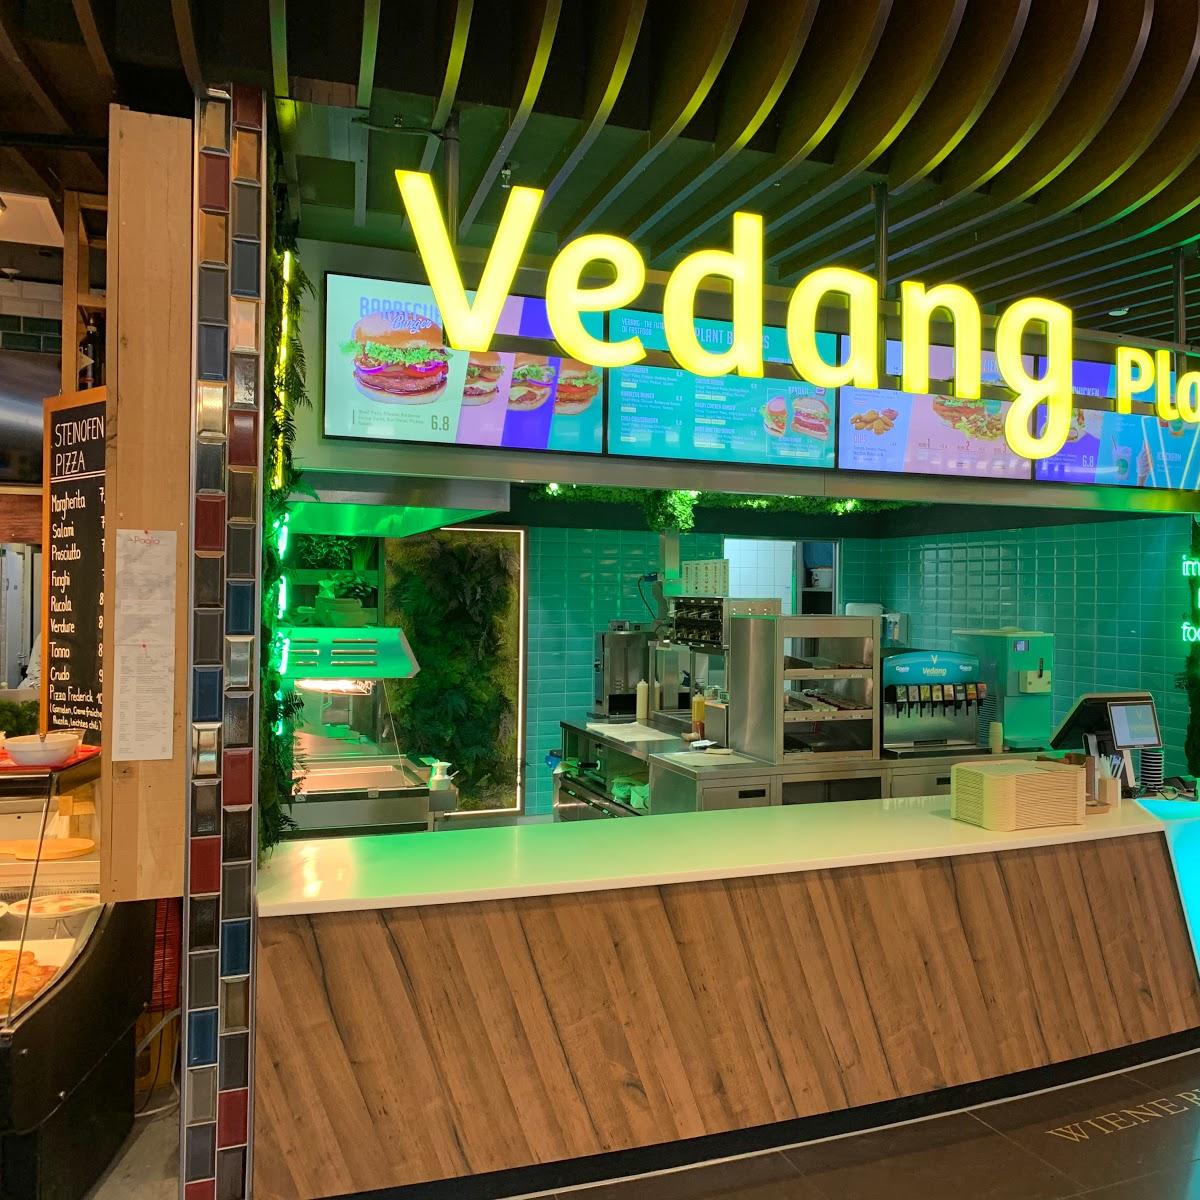 Restaurant "Vedang - plant burger (Mall of Berlin)" in Berlin